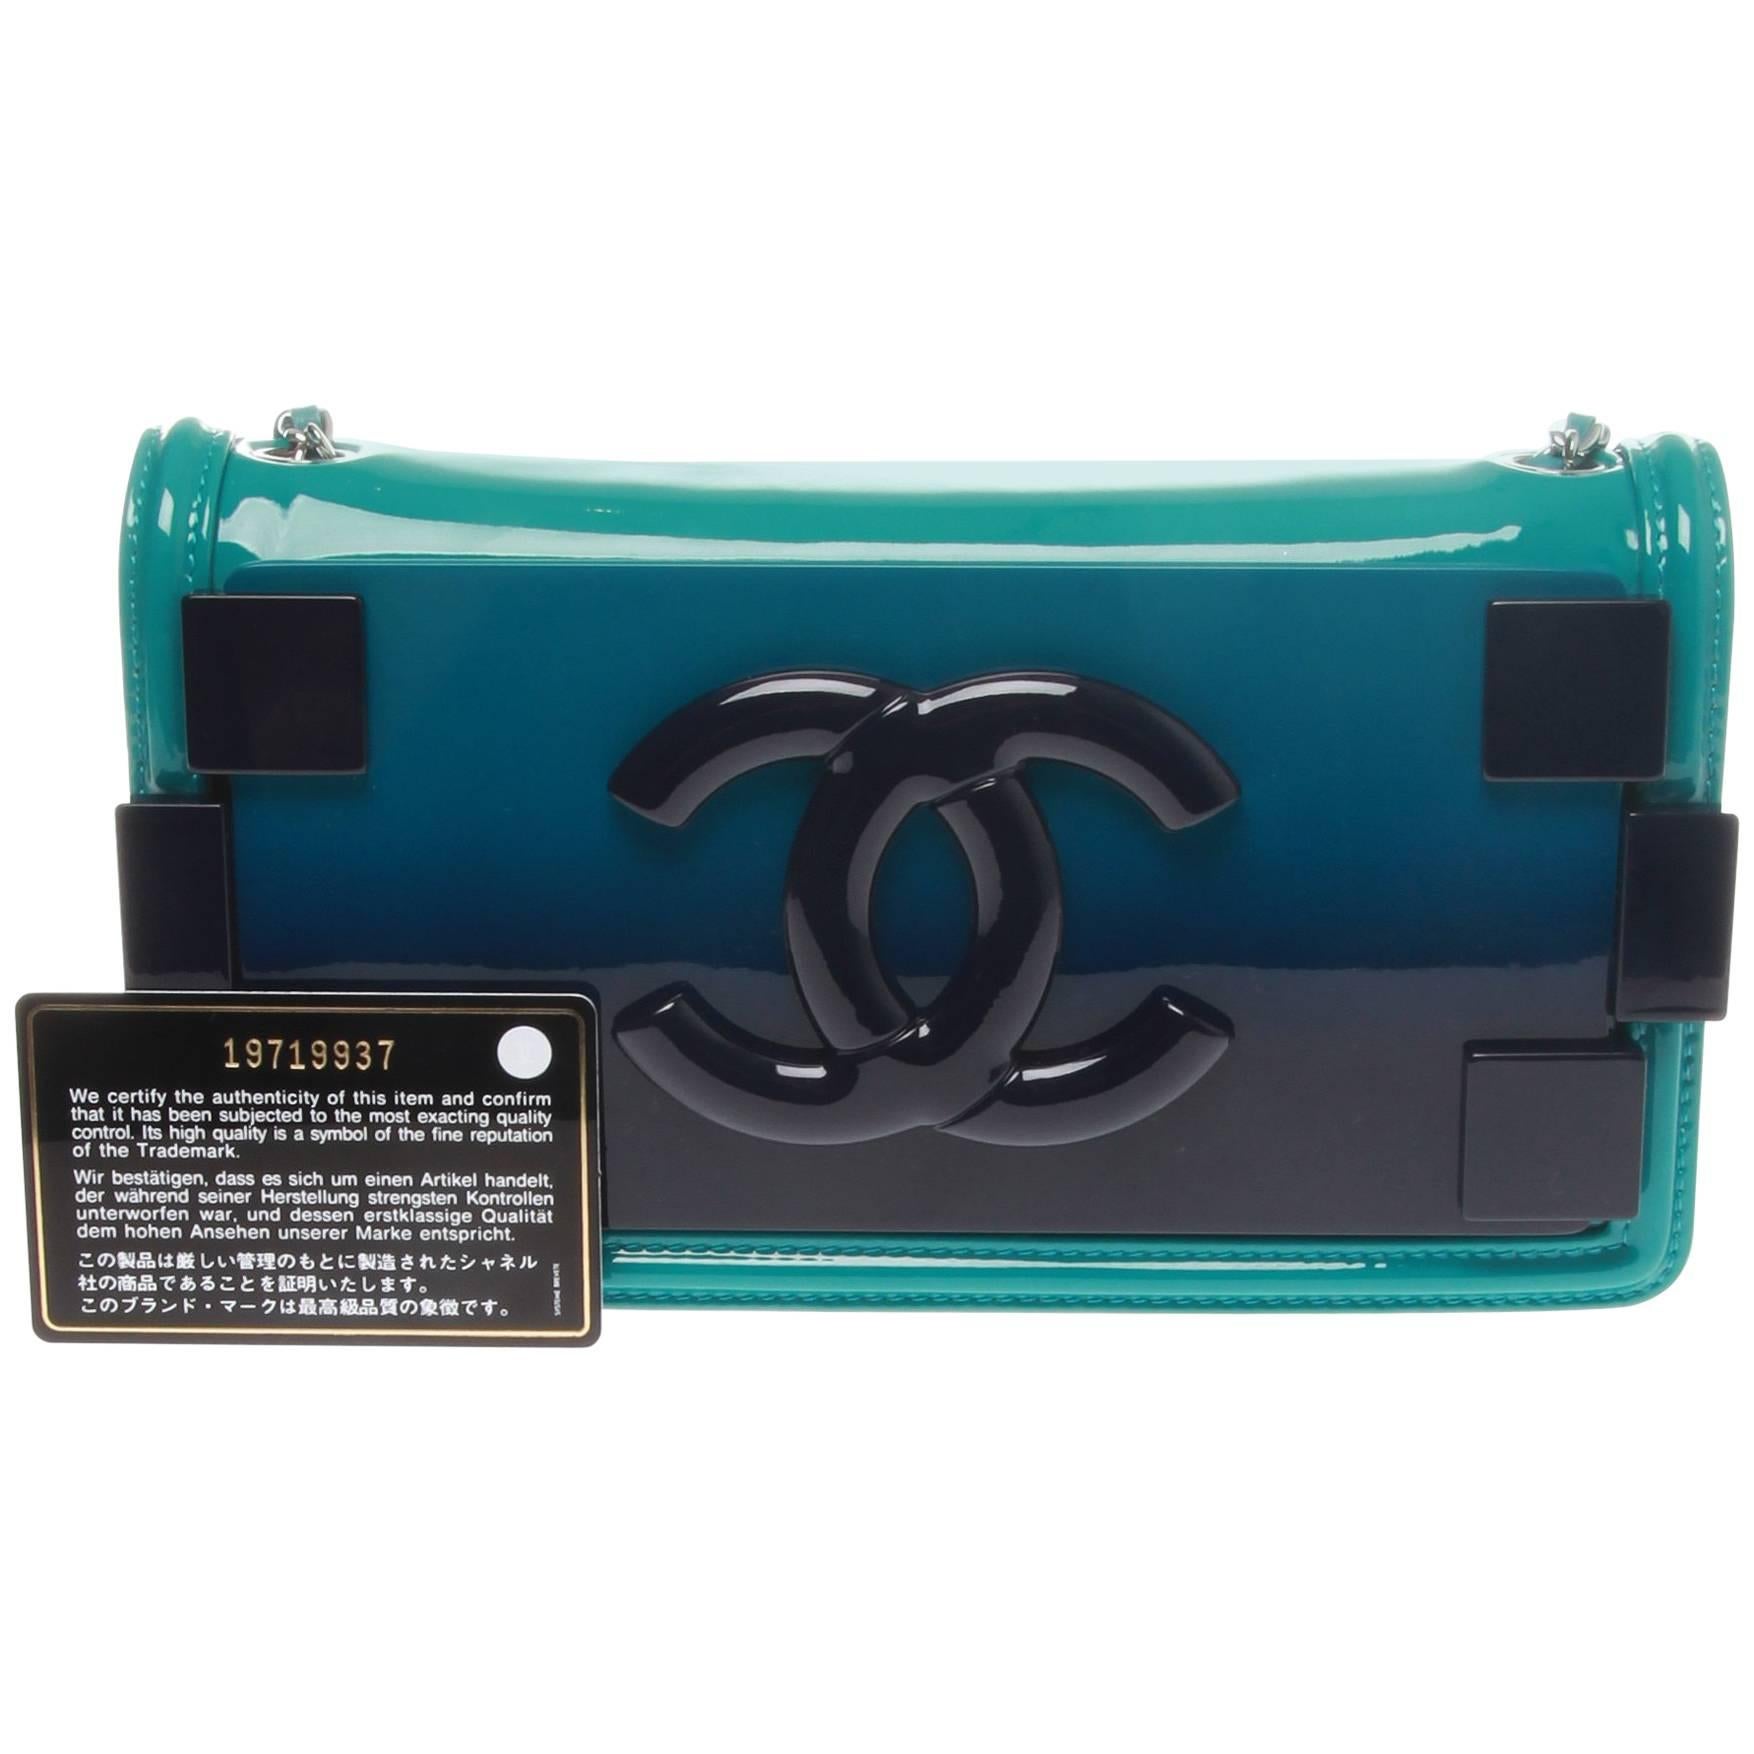 Chanel Turquoise Iridescent Plexiglass Lego Boy Brick Flap Bag For Sale